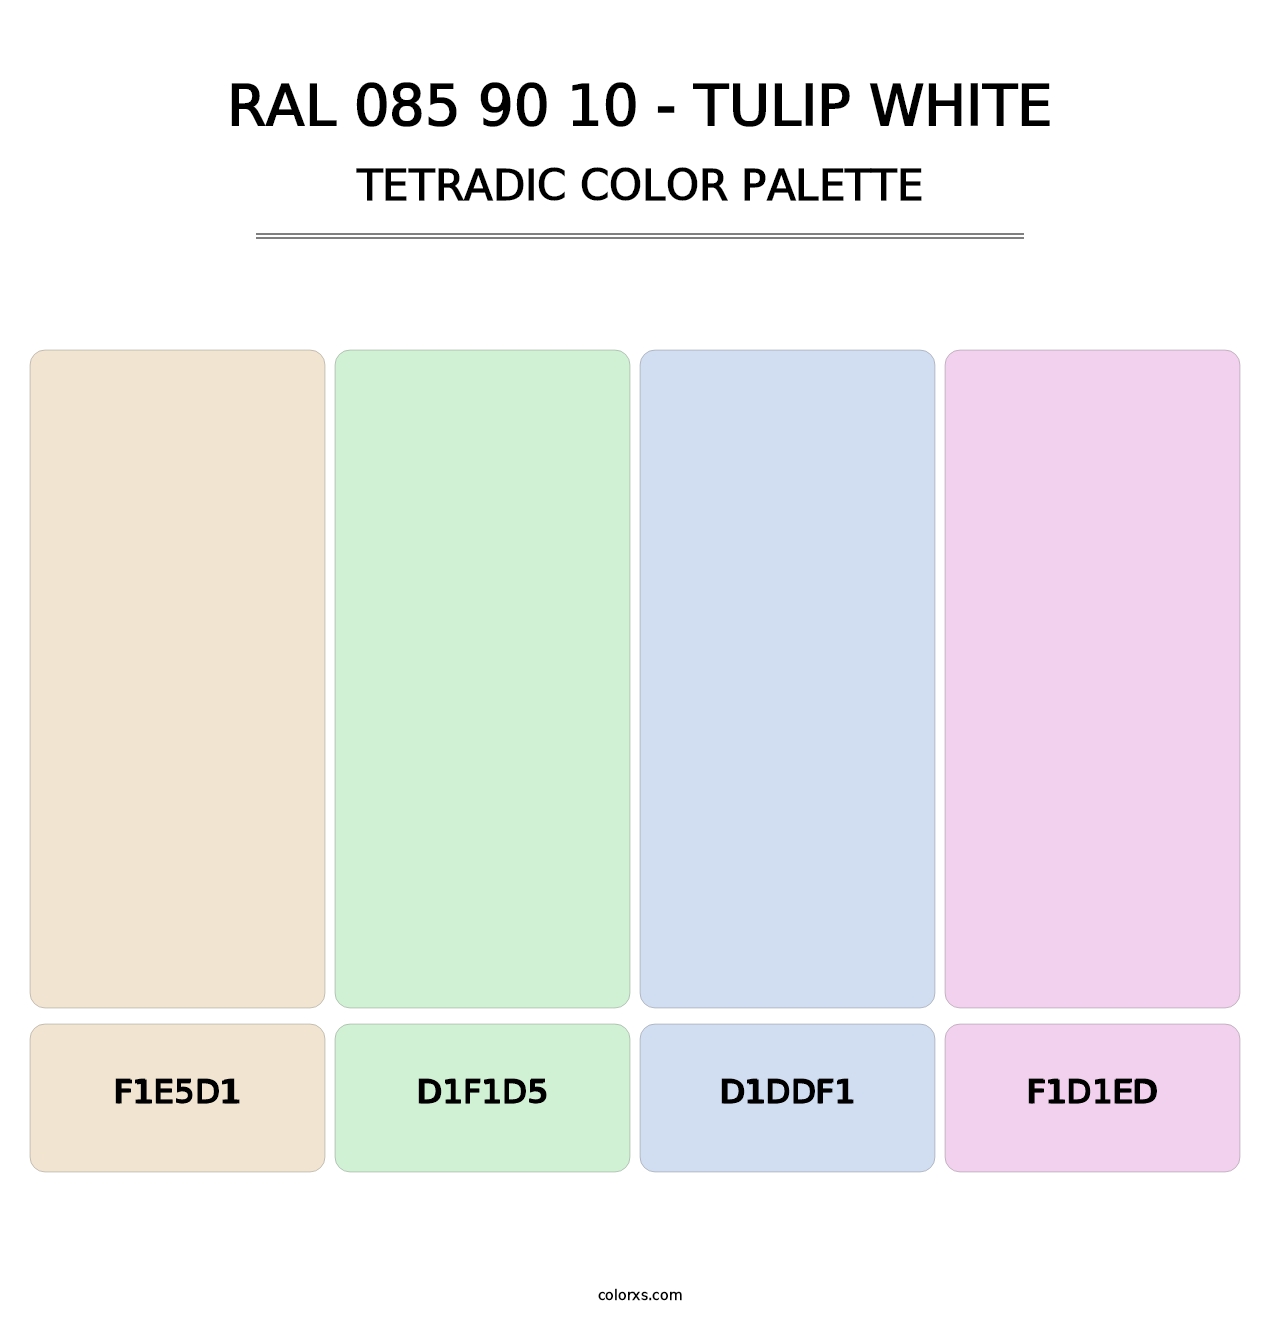 RAL 085 90 10 - Tulip White - Tetradic Color Palette